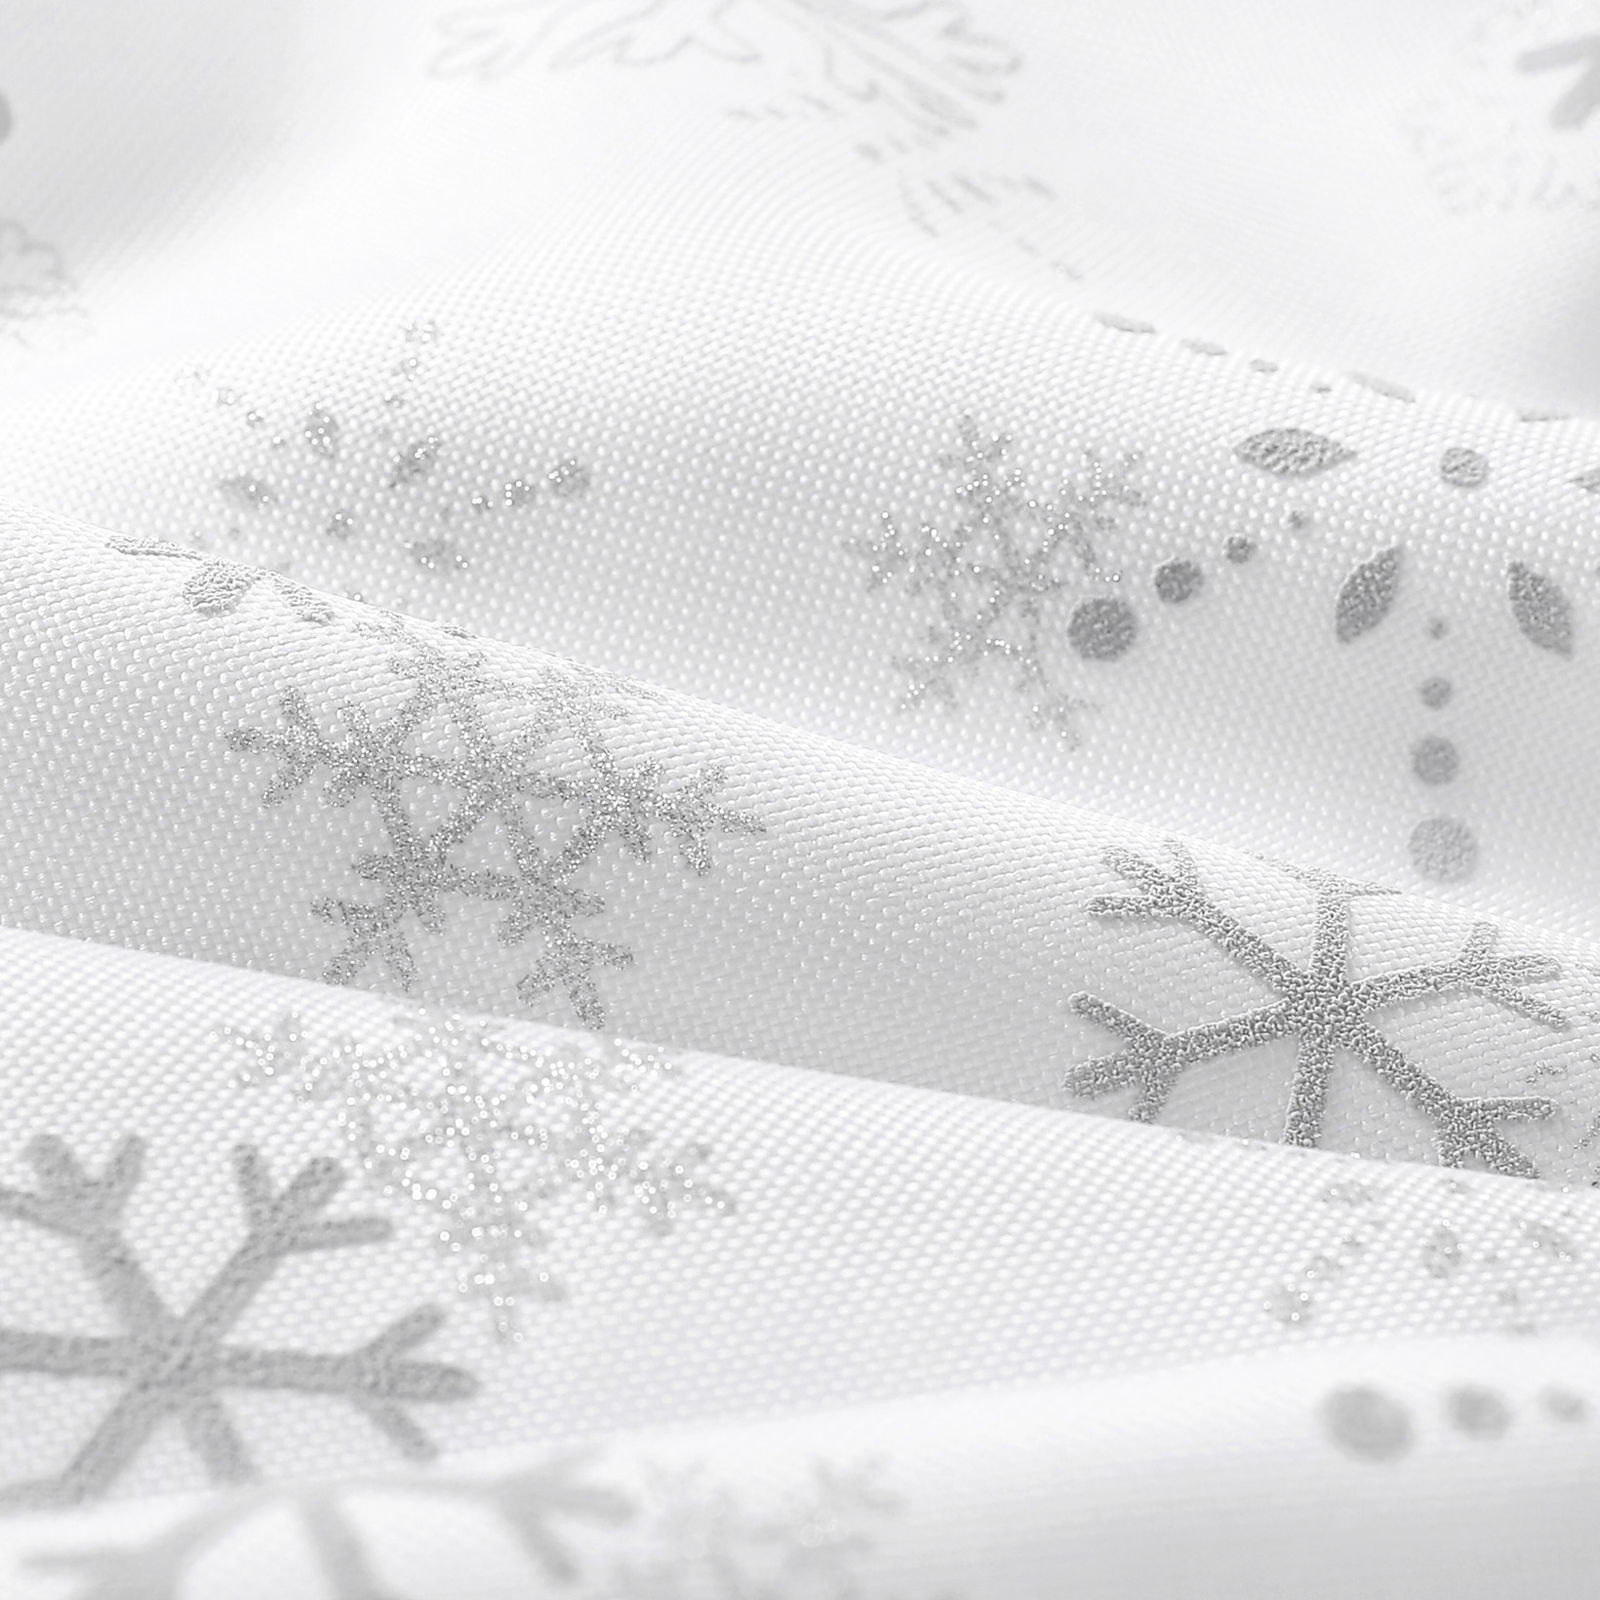 Tkanina obrusowa plamoodporna - srebrne płatki śniegu na białym